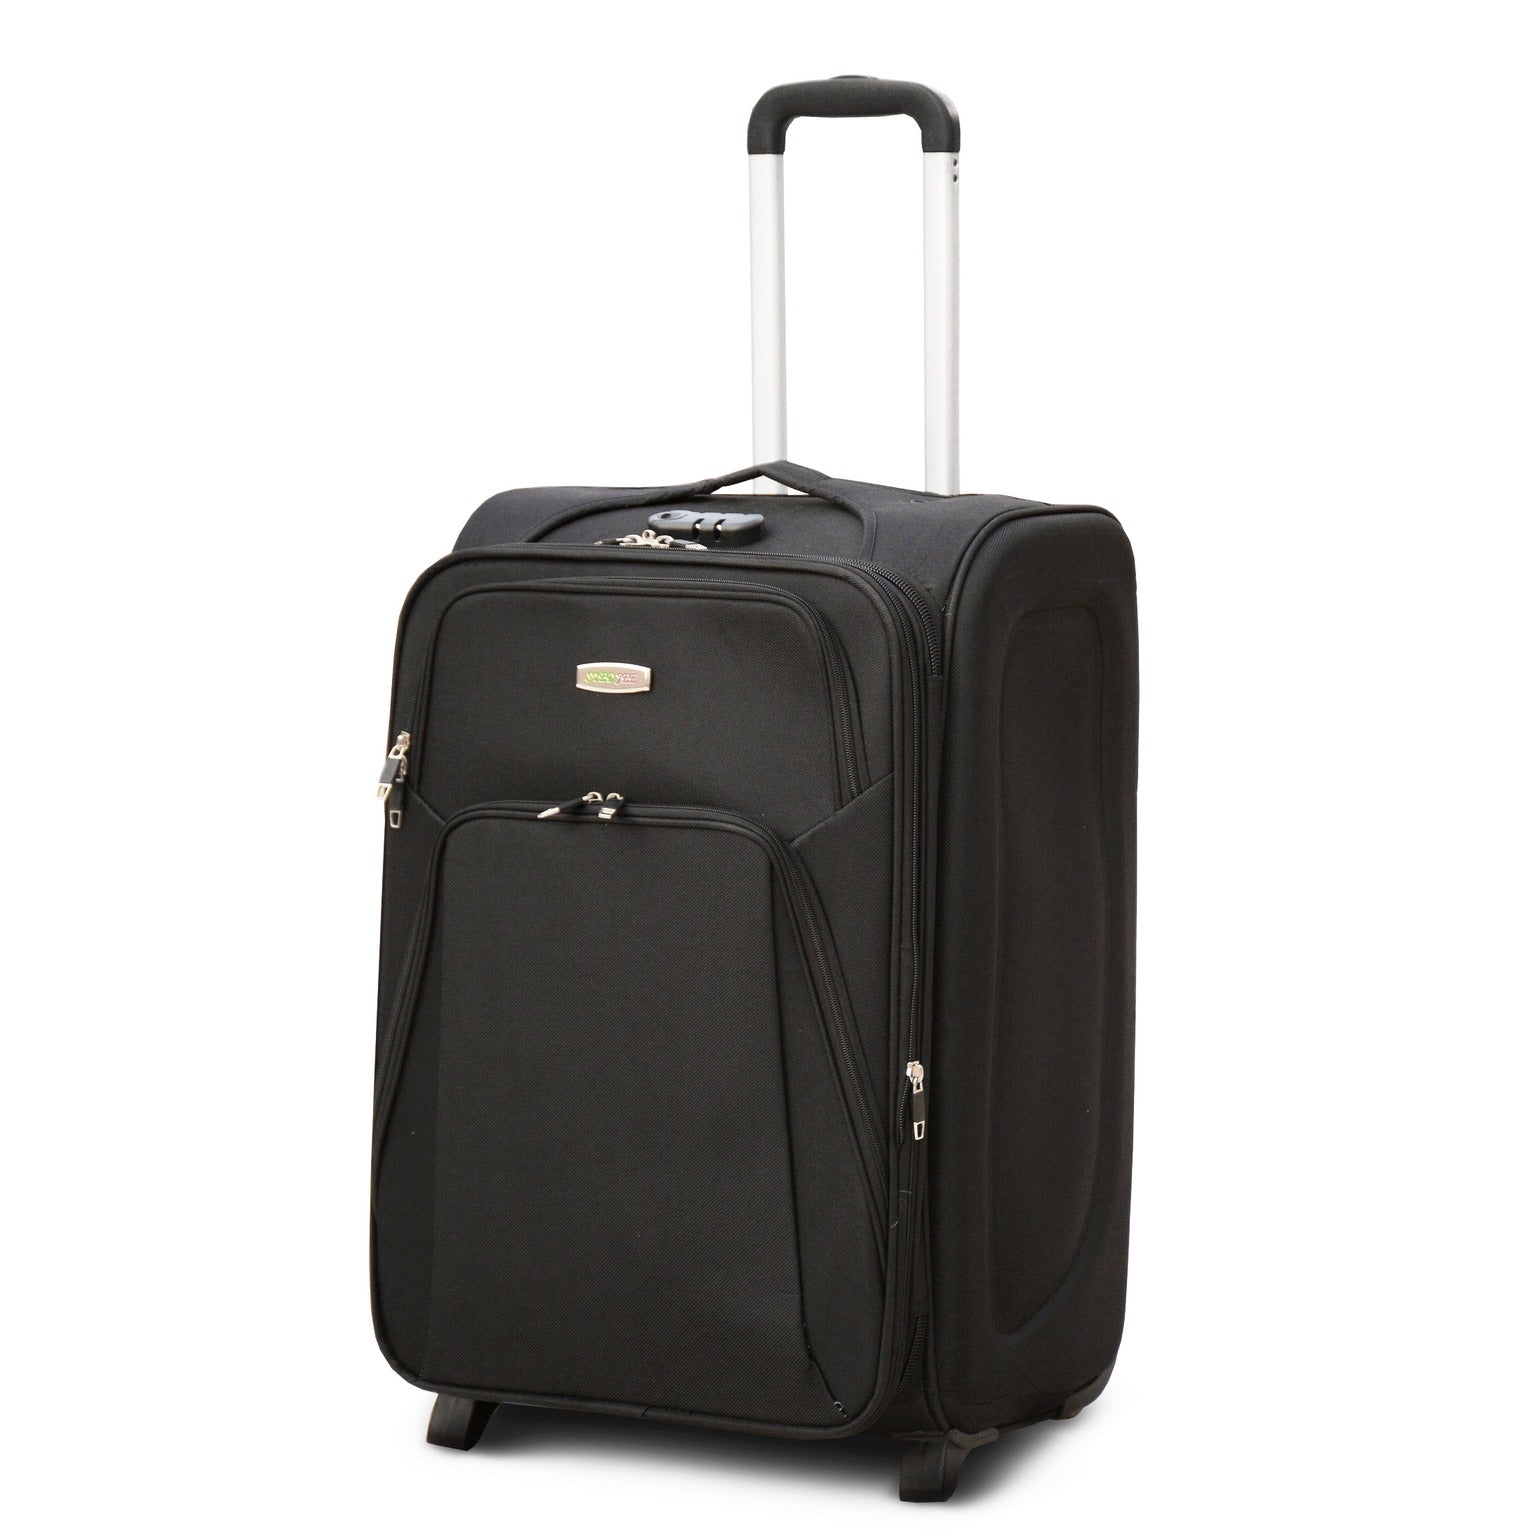 24" Black Colour SJ JIAN 2 Wheel Luggage Lightweight Soft Material Trolley Bag